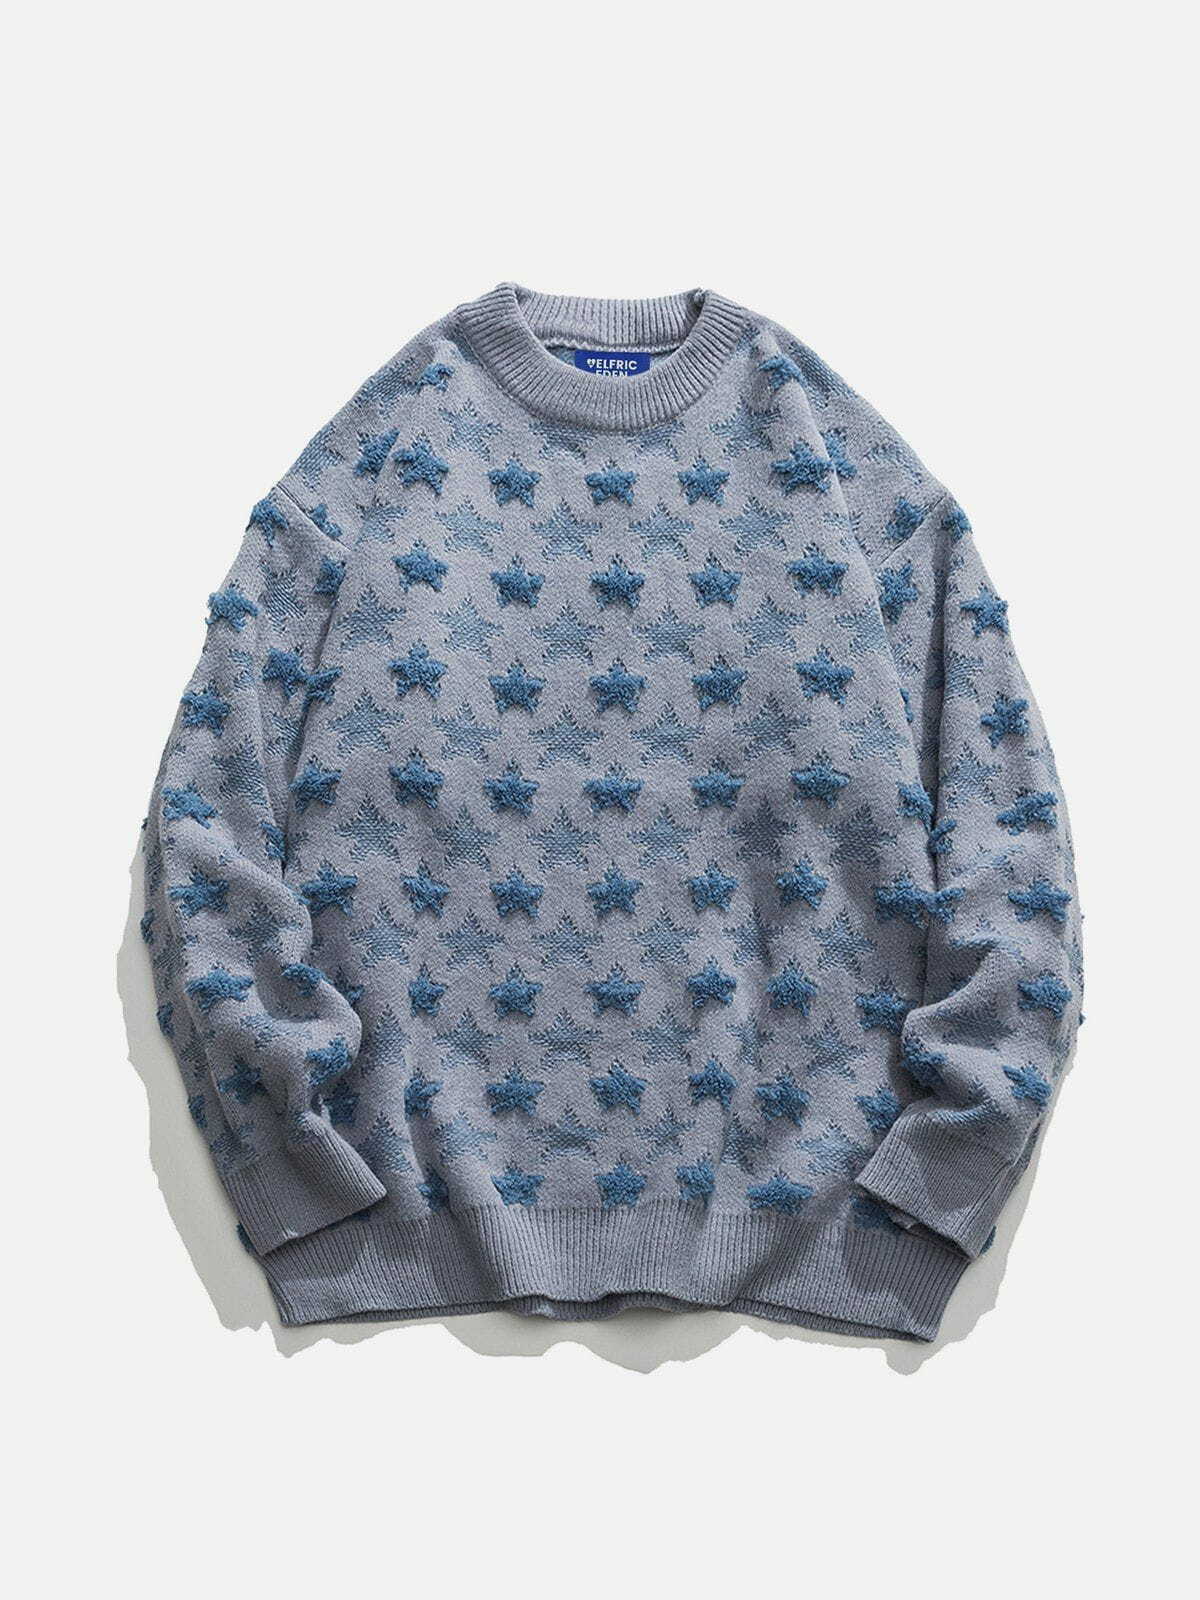 youthful star jacquard sweater   urban chic & cozy 8099